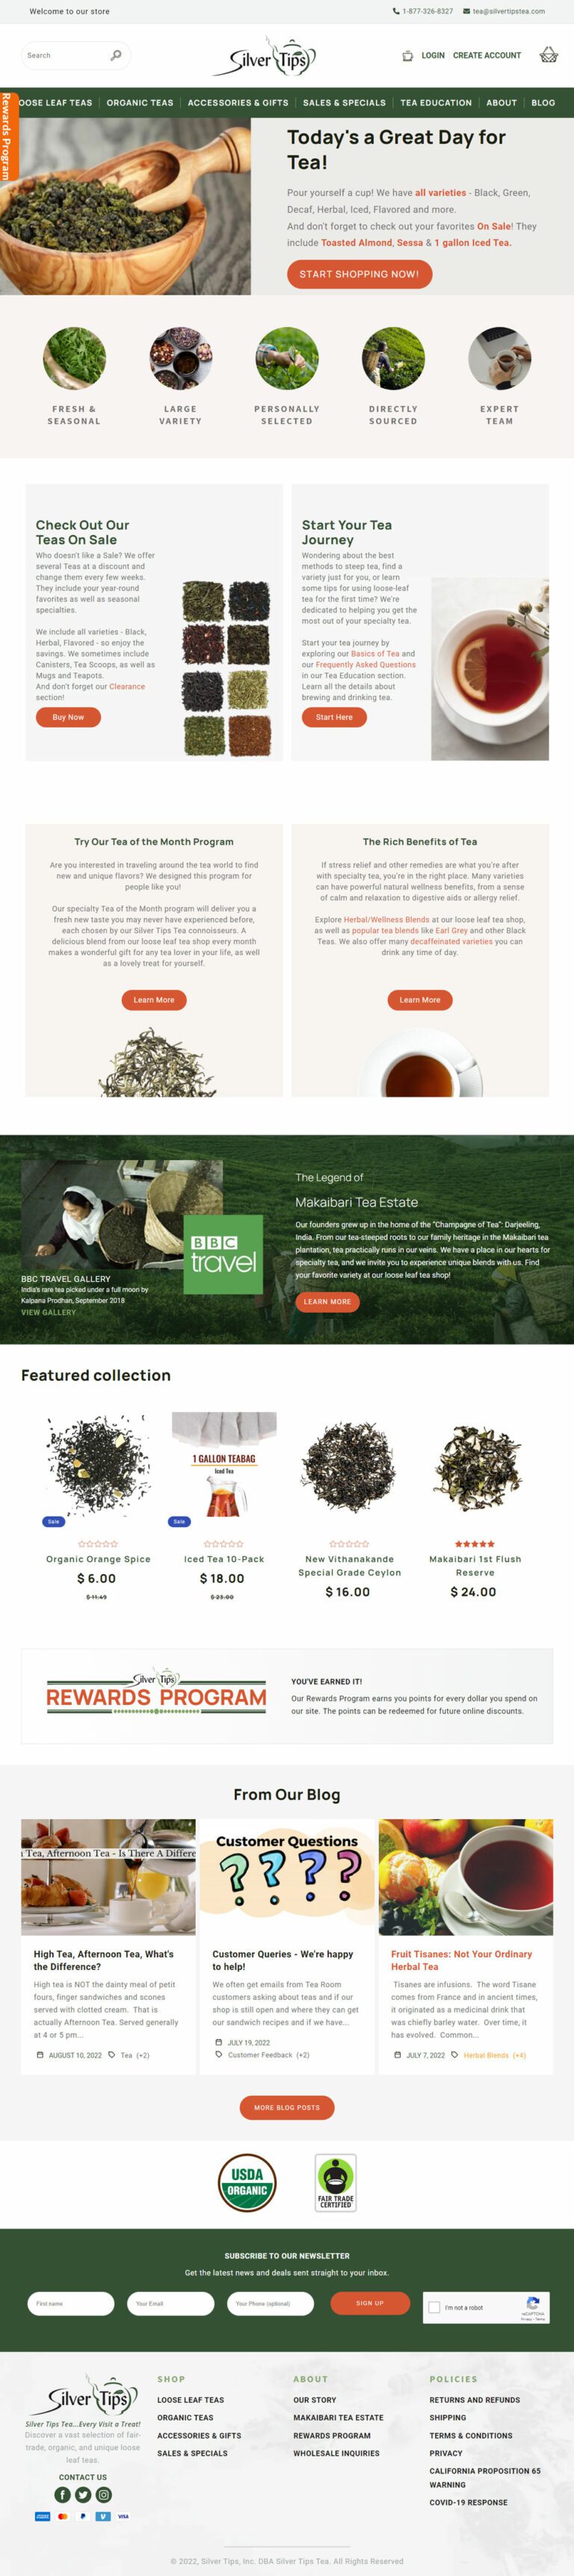 Silver Tips Tea Homepage